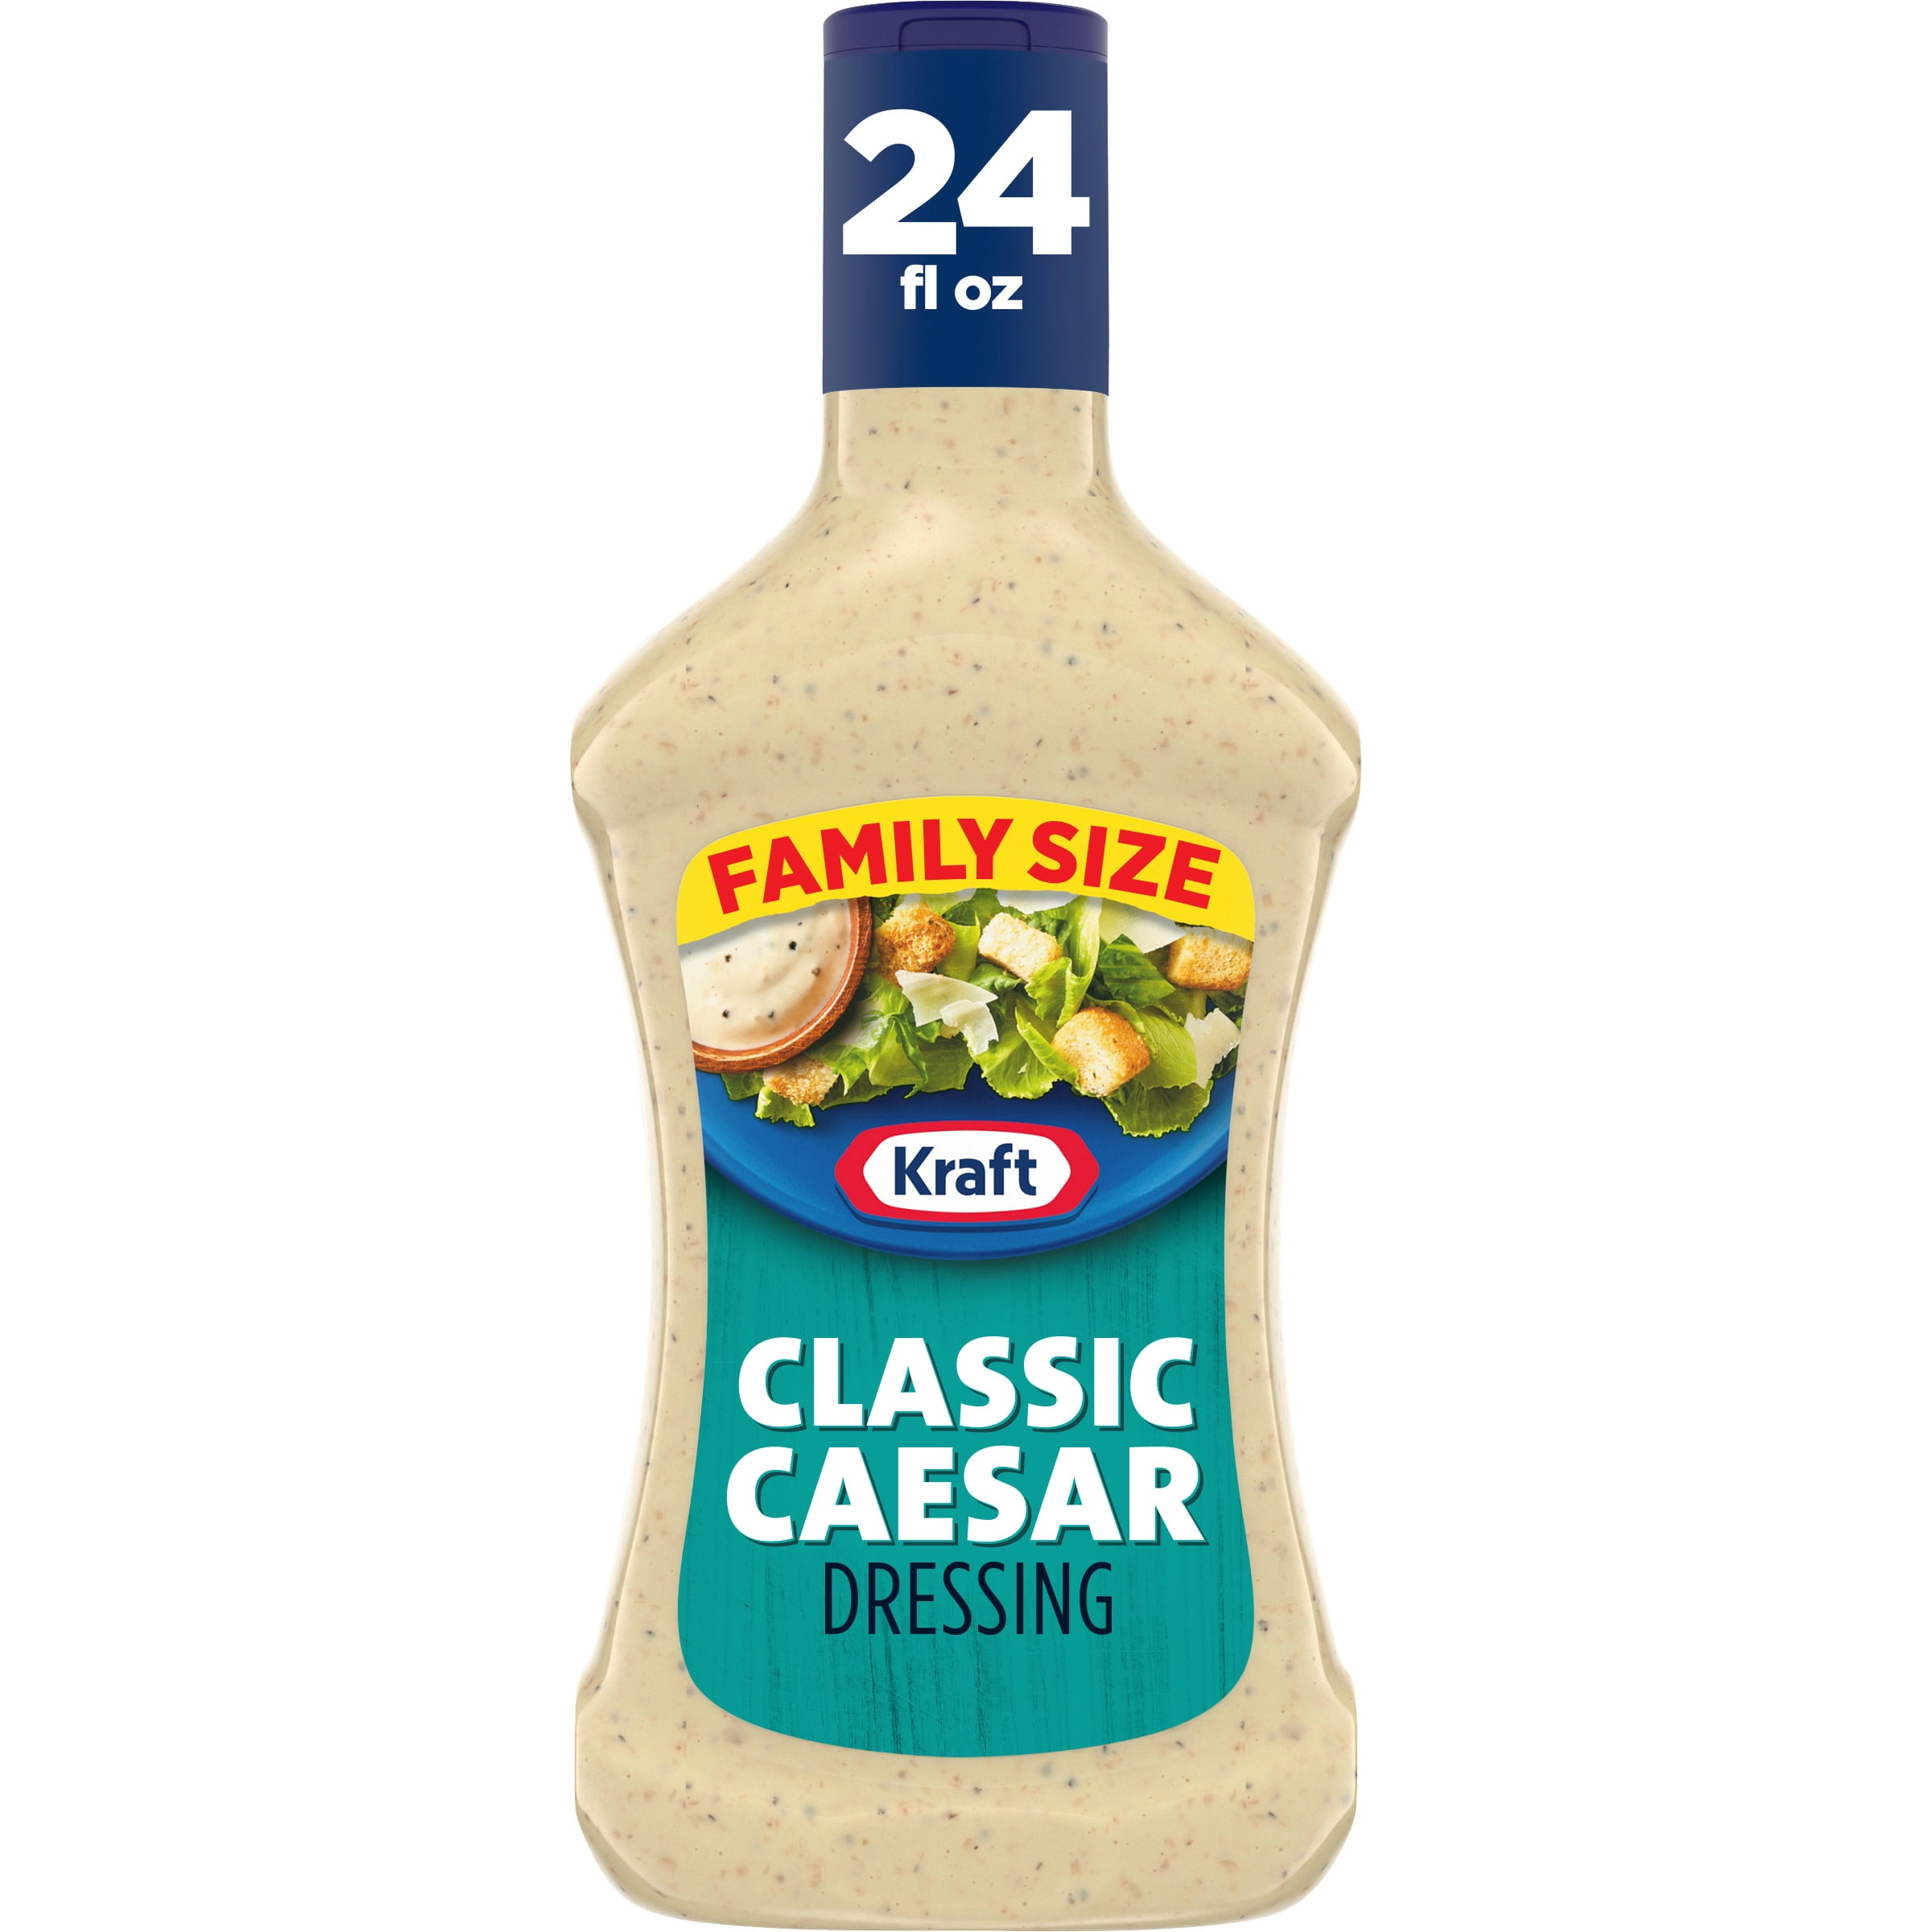 Grab & Go Family Size Caesar Salad Bowl Kit, 19.35 oz - Fry's Food Stores